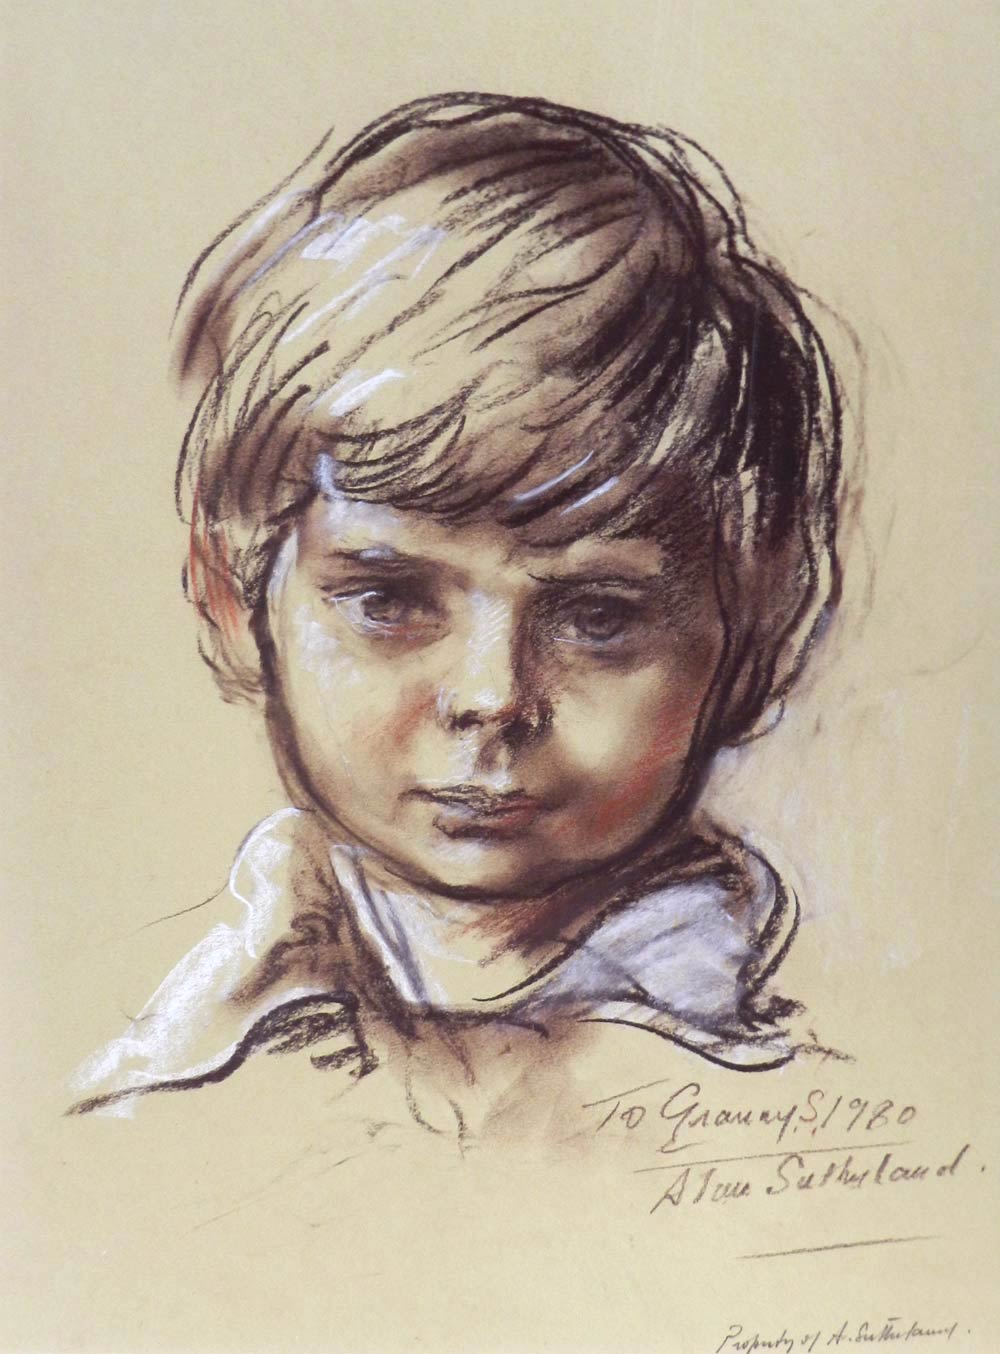 Alan Sutherland - Portrait drawings